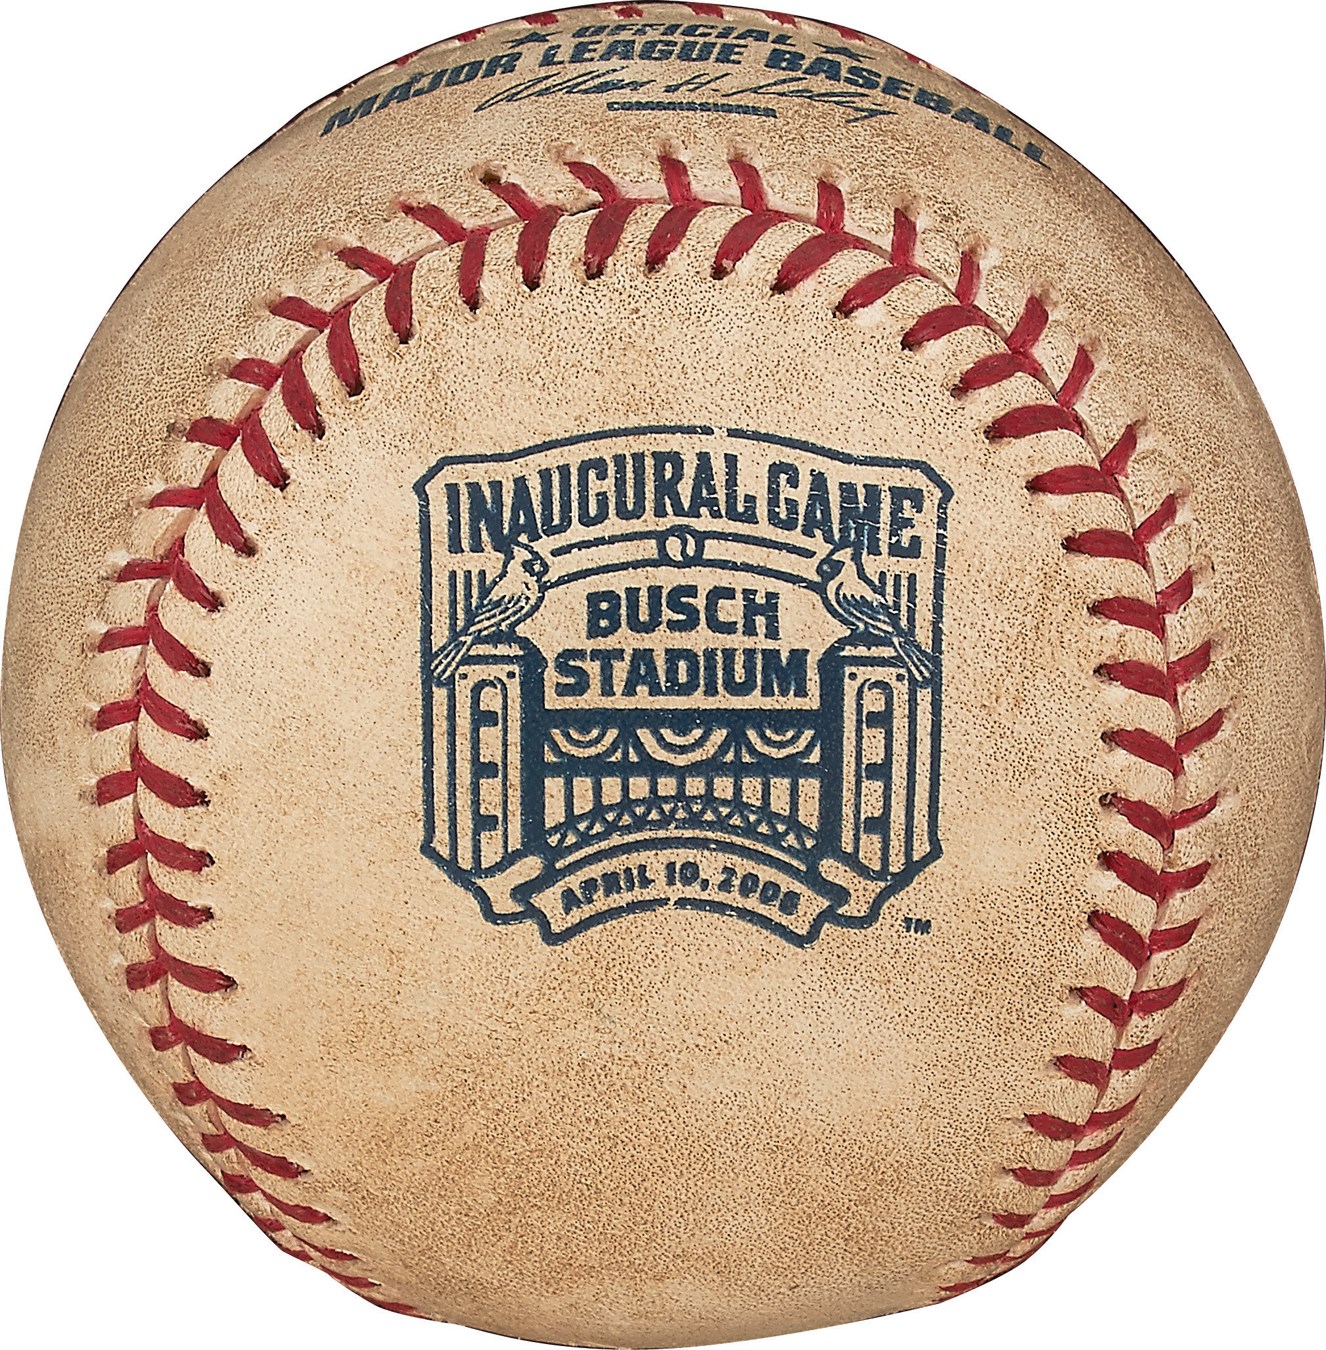 St. Louis Cardinals - First Home Run Baseball at New Busch Stadium - from the Man Who Caught It